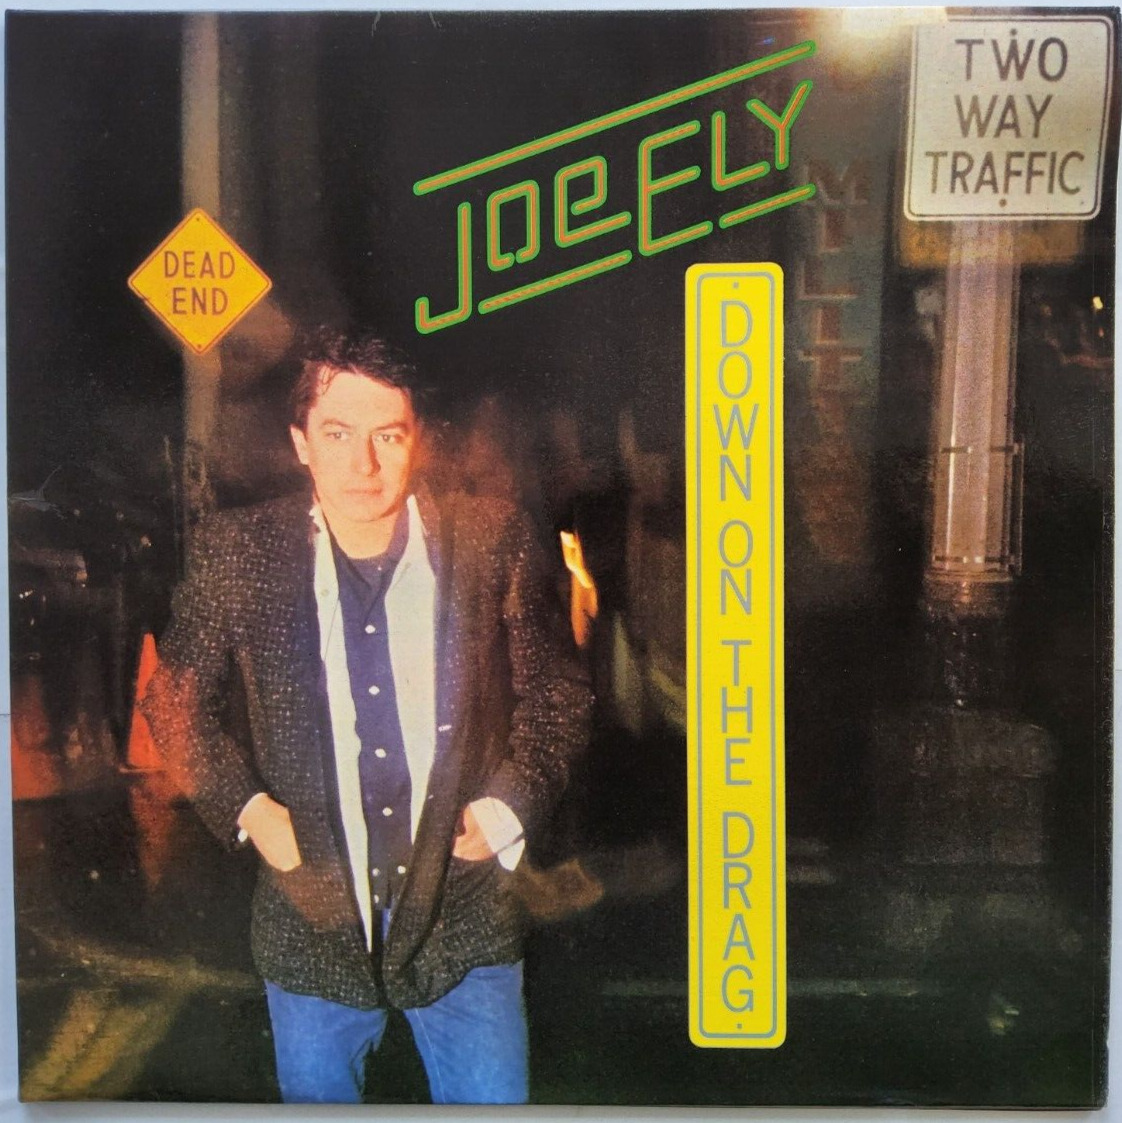 Joe Ely – Down on The Drag LP Album vinyl record Near Mint copy signed on back